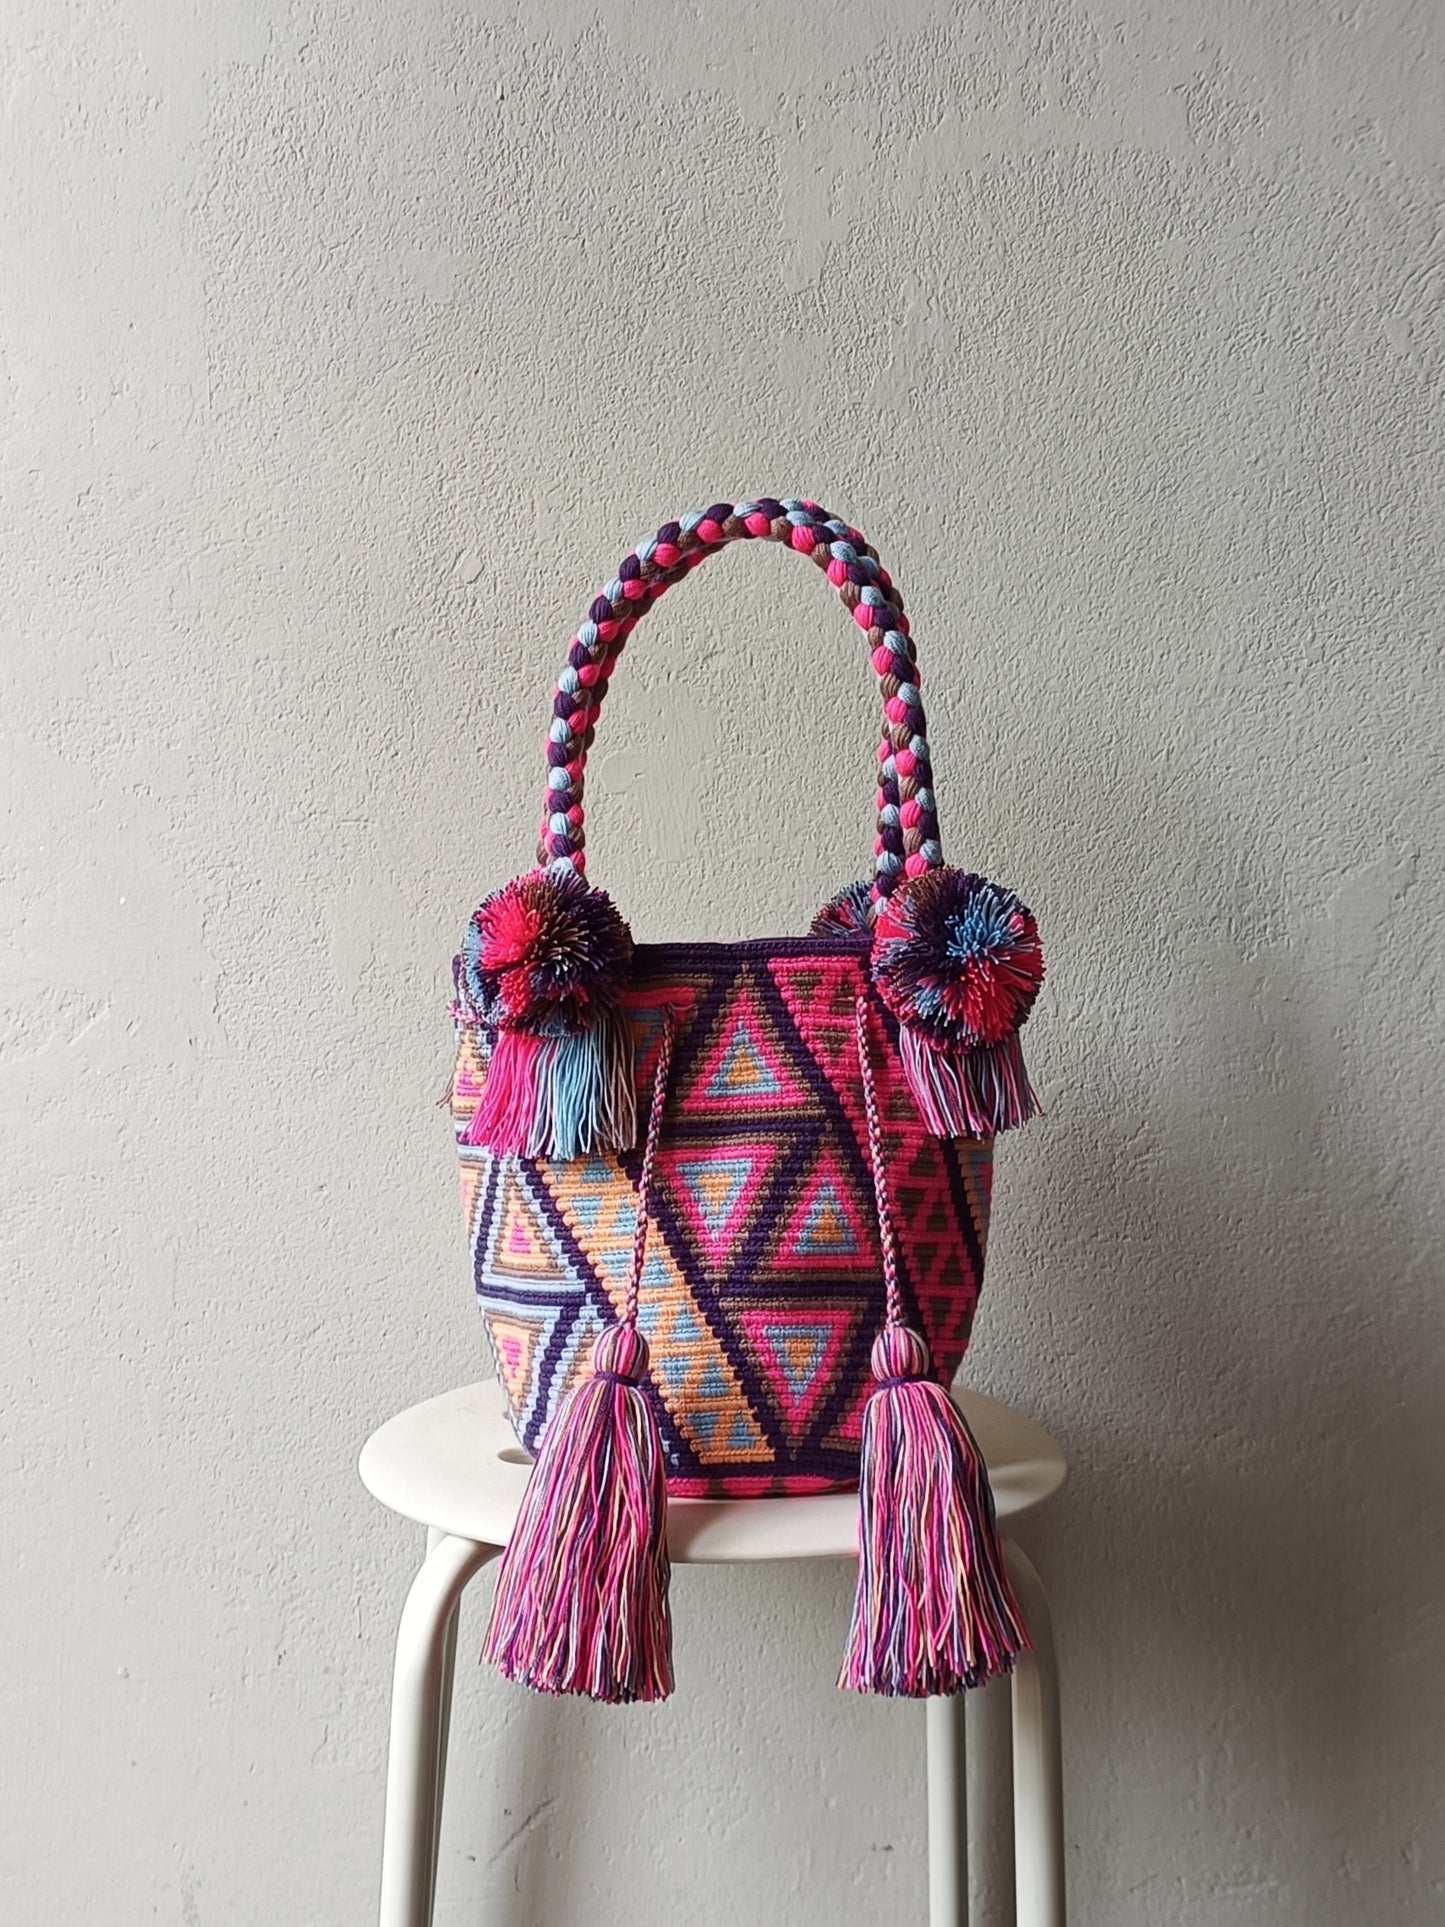 END OF SERIES - Pink and light blue M mochila handbag